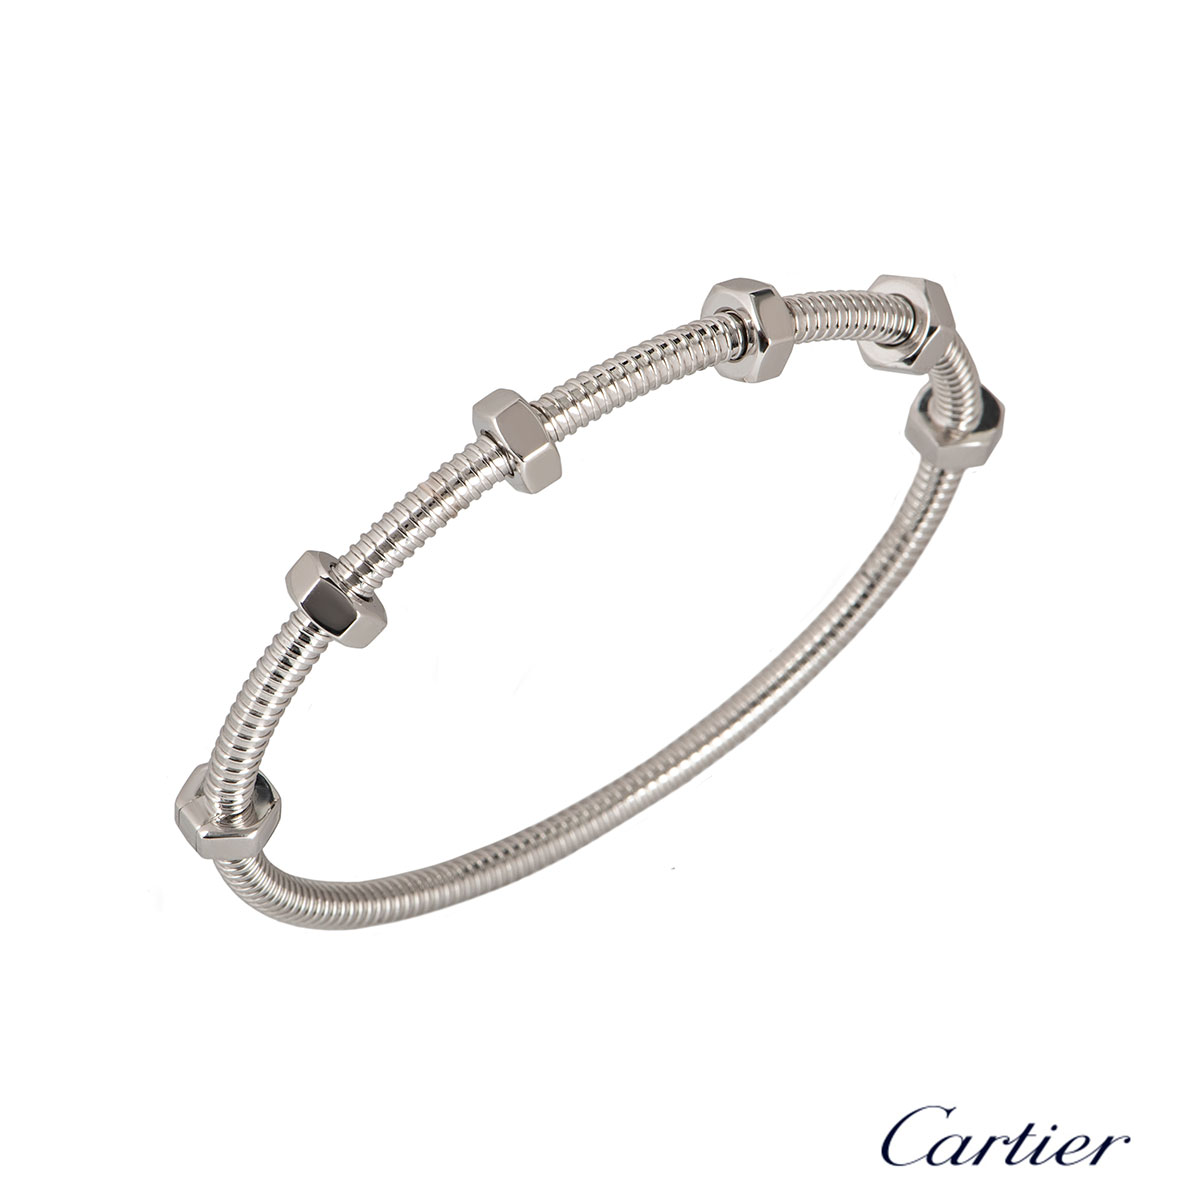 how to open cartier ecrou bracelet